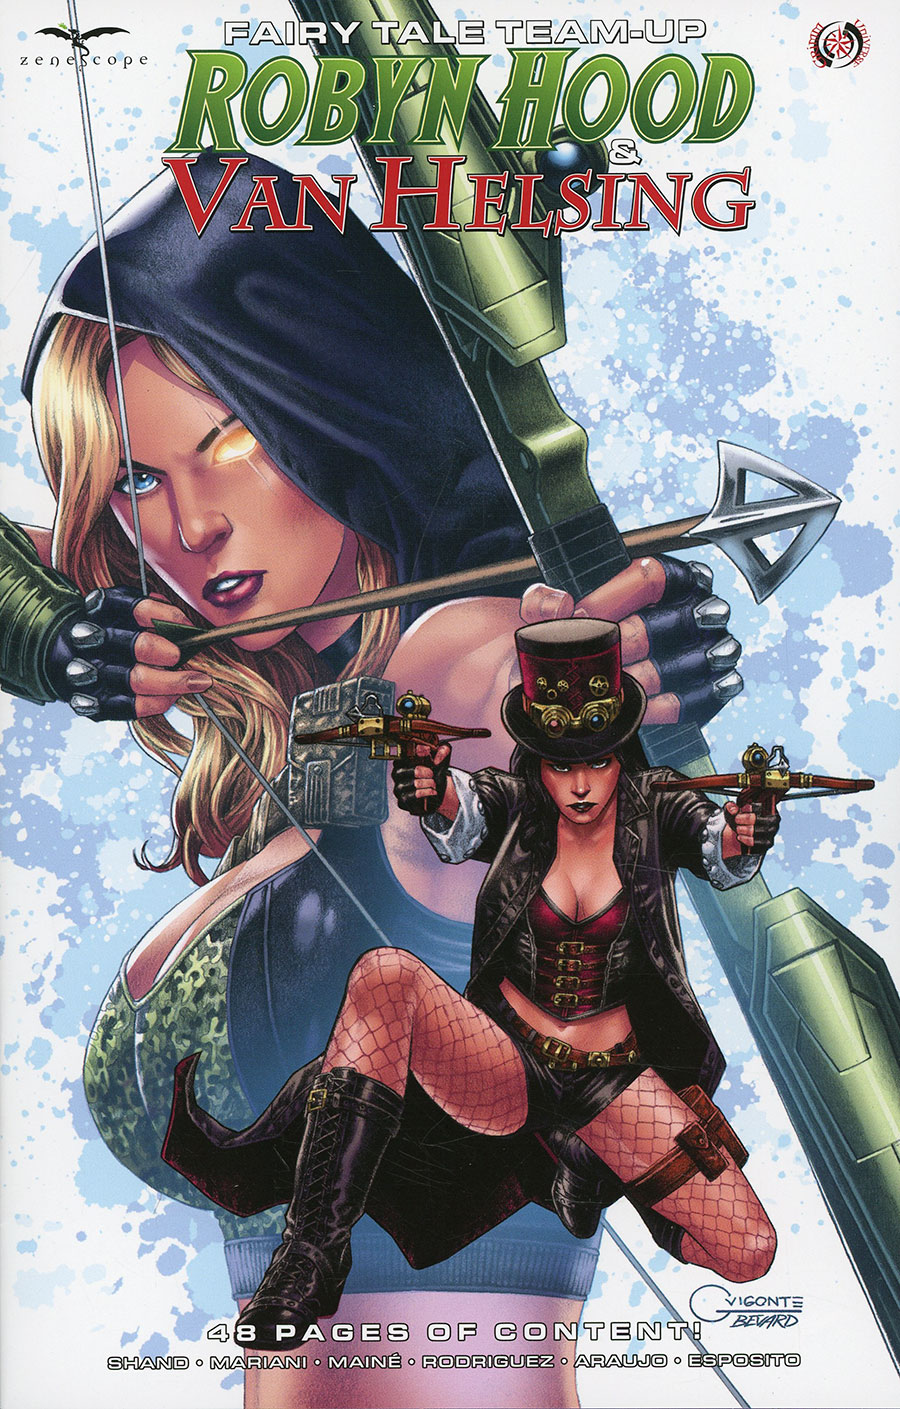 Grimm Fairy Tales Presents Fairy Tale Team-Up Robyn Hood & Van Helsing #1 (One Shot) Cover A Regular Geebo Vigonte Cover